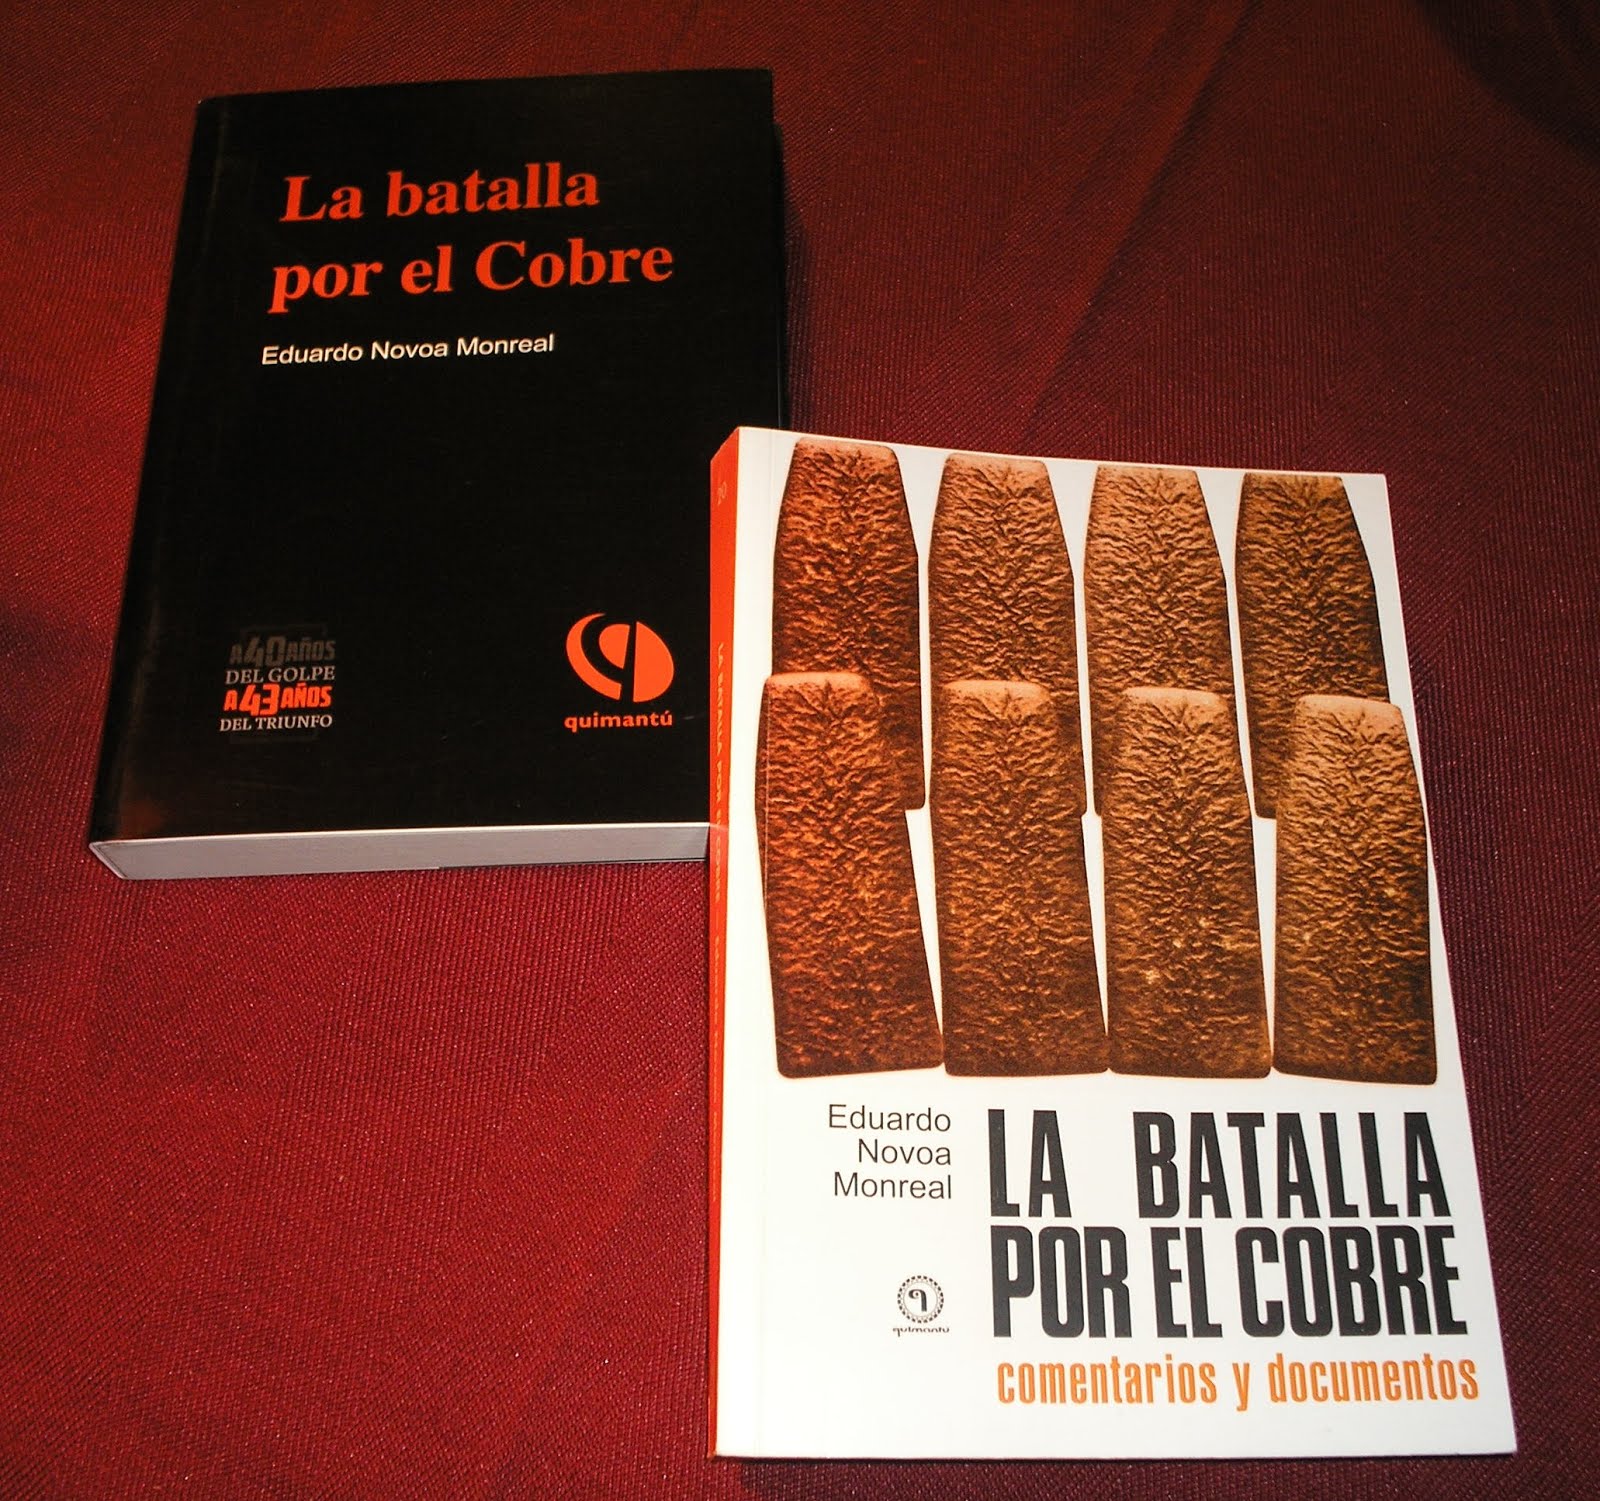 "La batalla por el cobre".